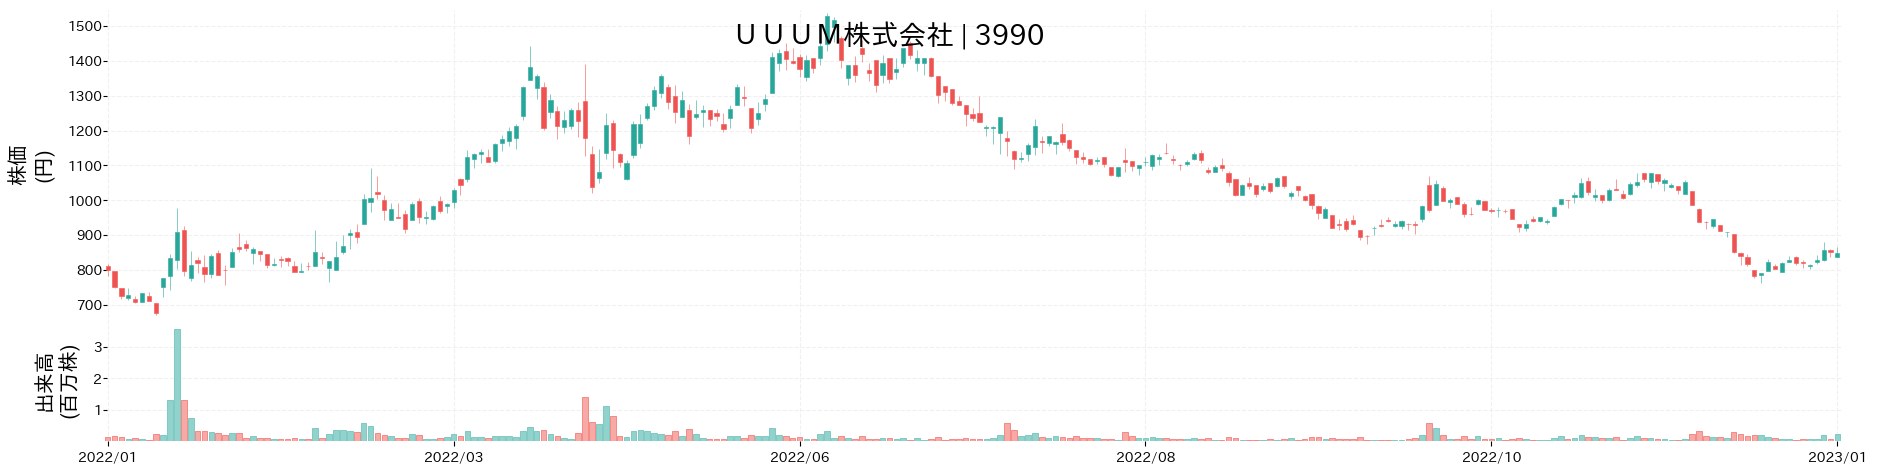 UUUMの株価推移(2022)